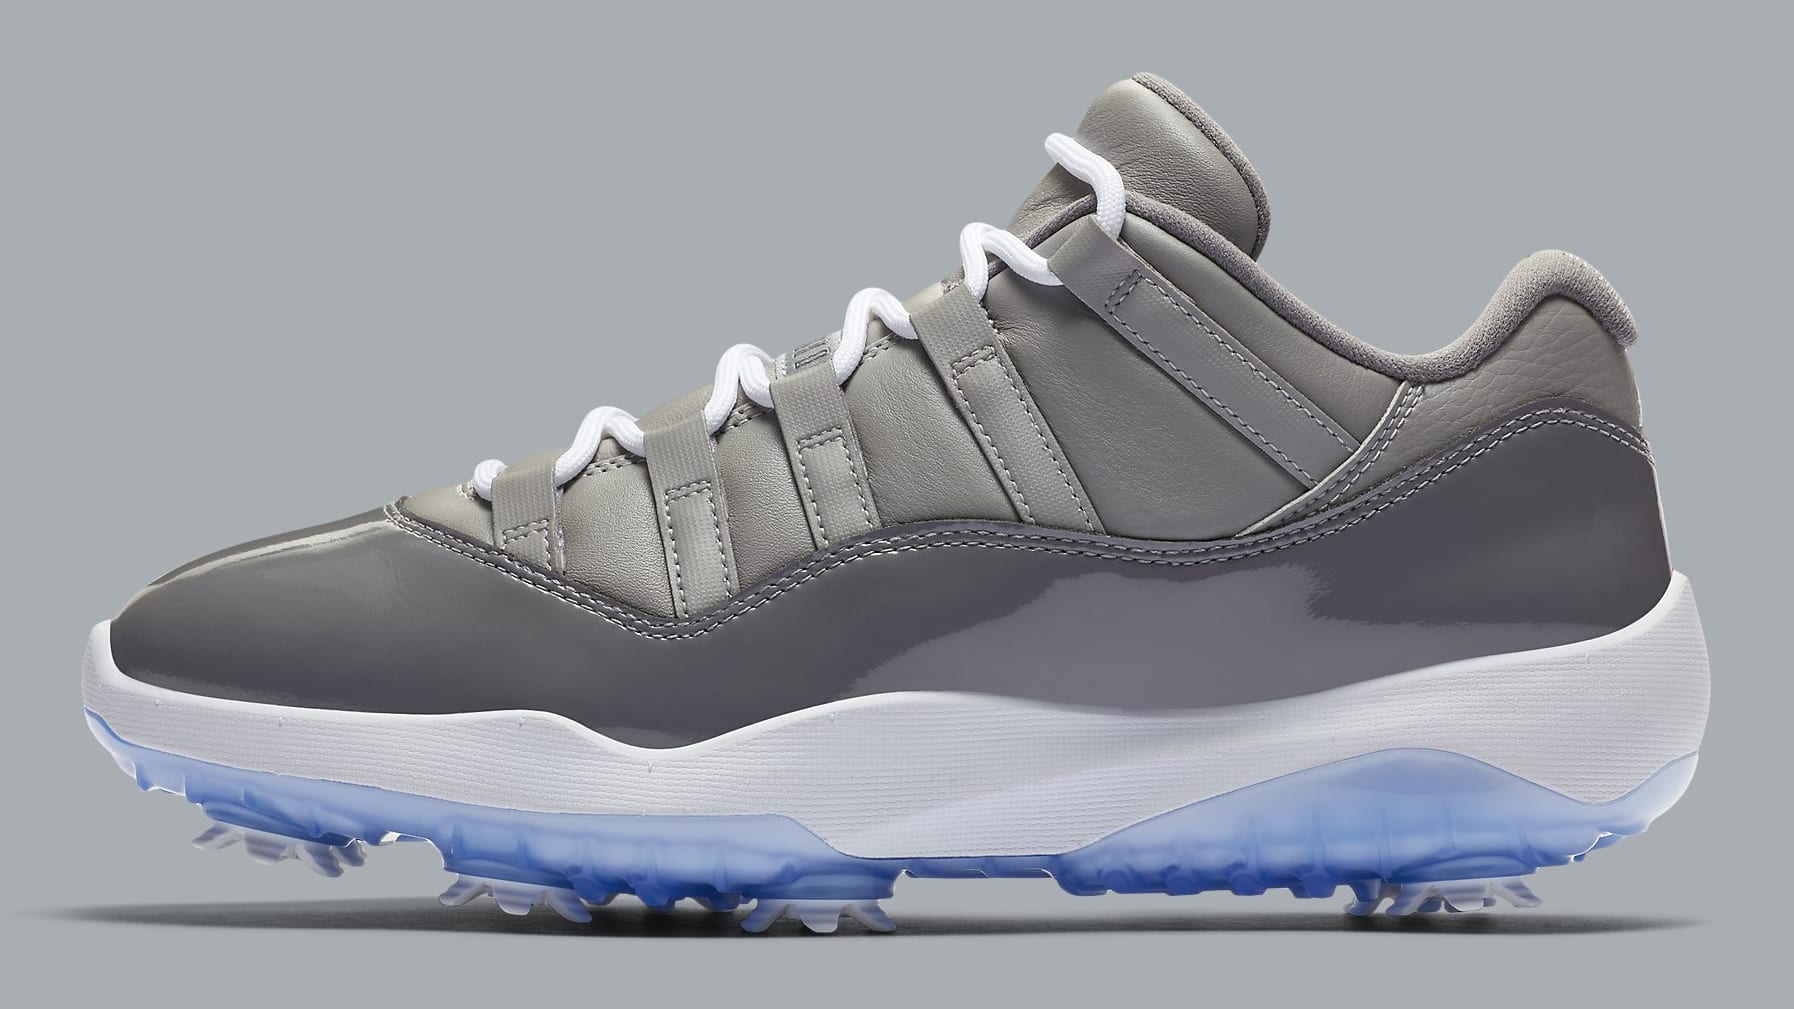 Air Jordan 11 Low &quot;Cool Grey&quot; Given Golf Show Makeover: Details